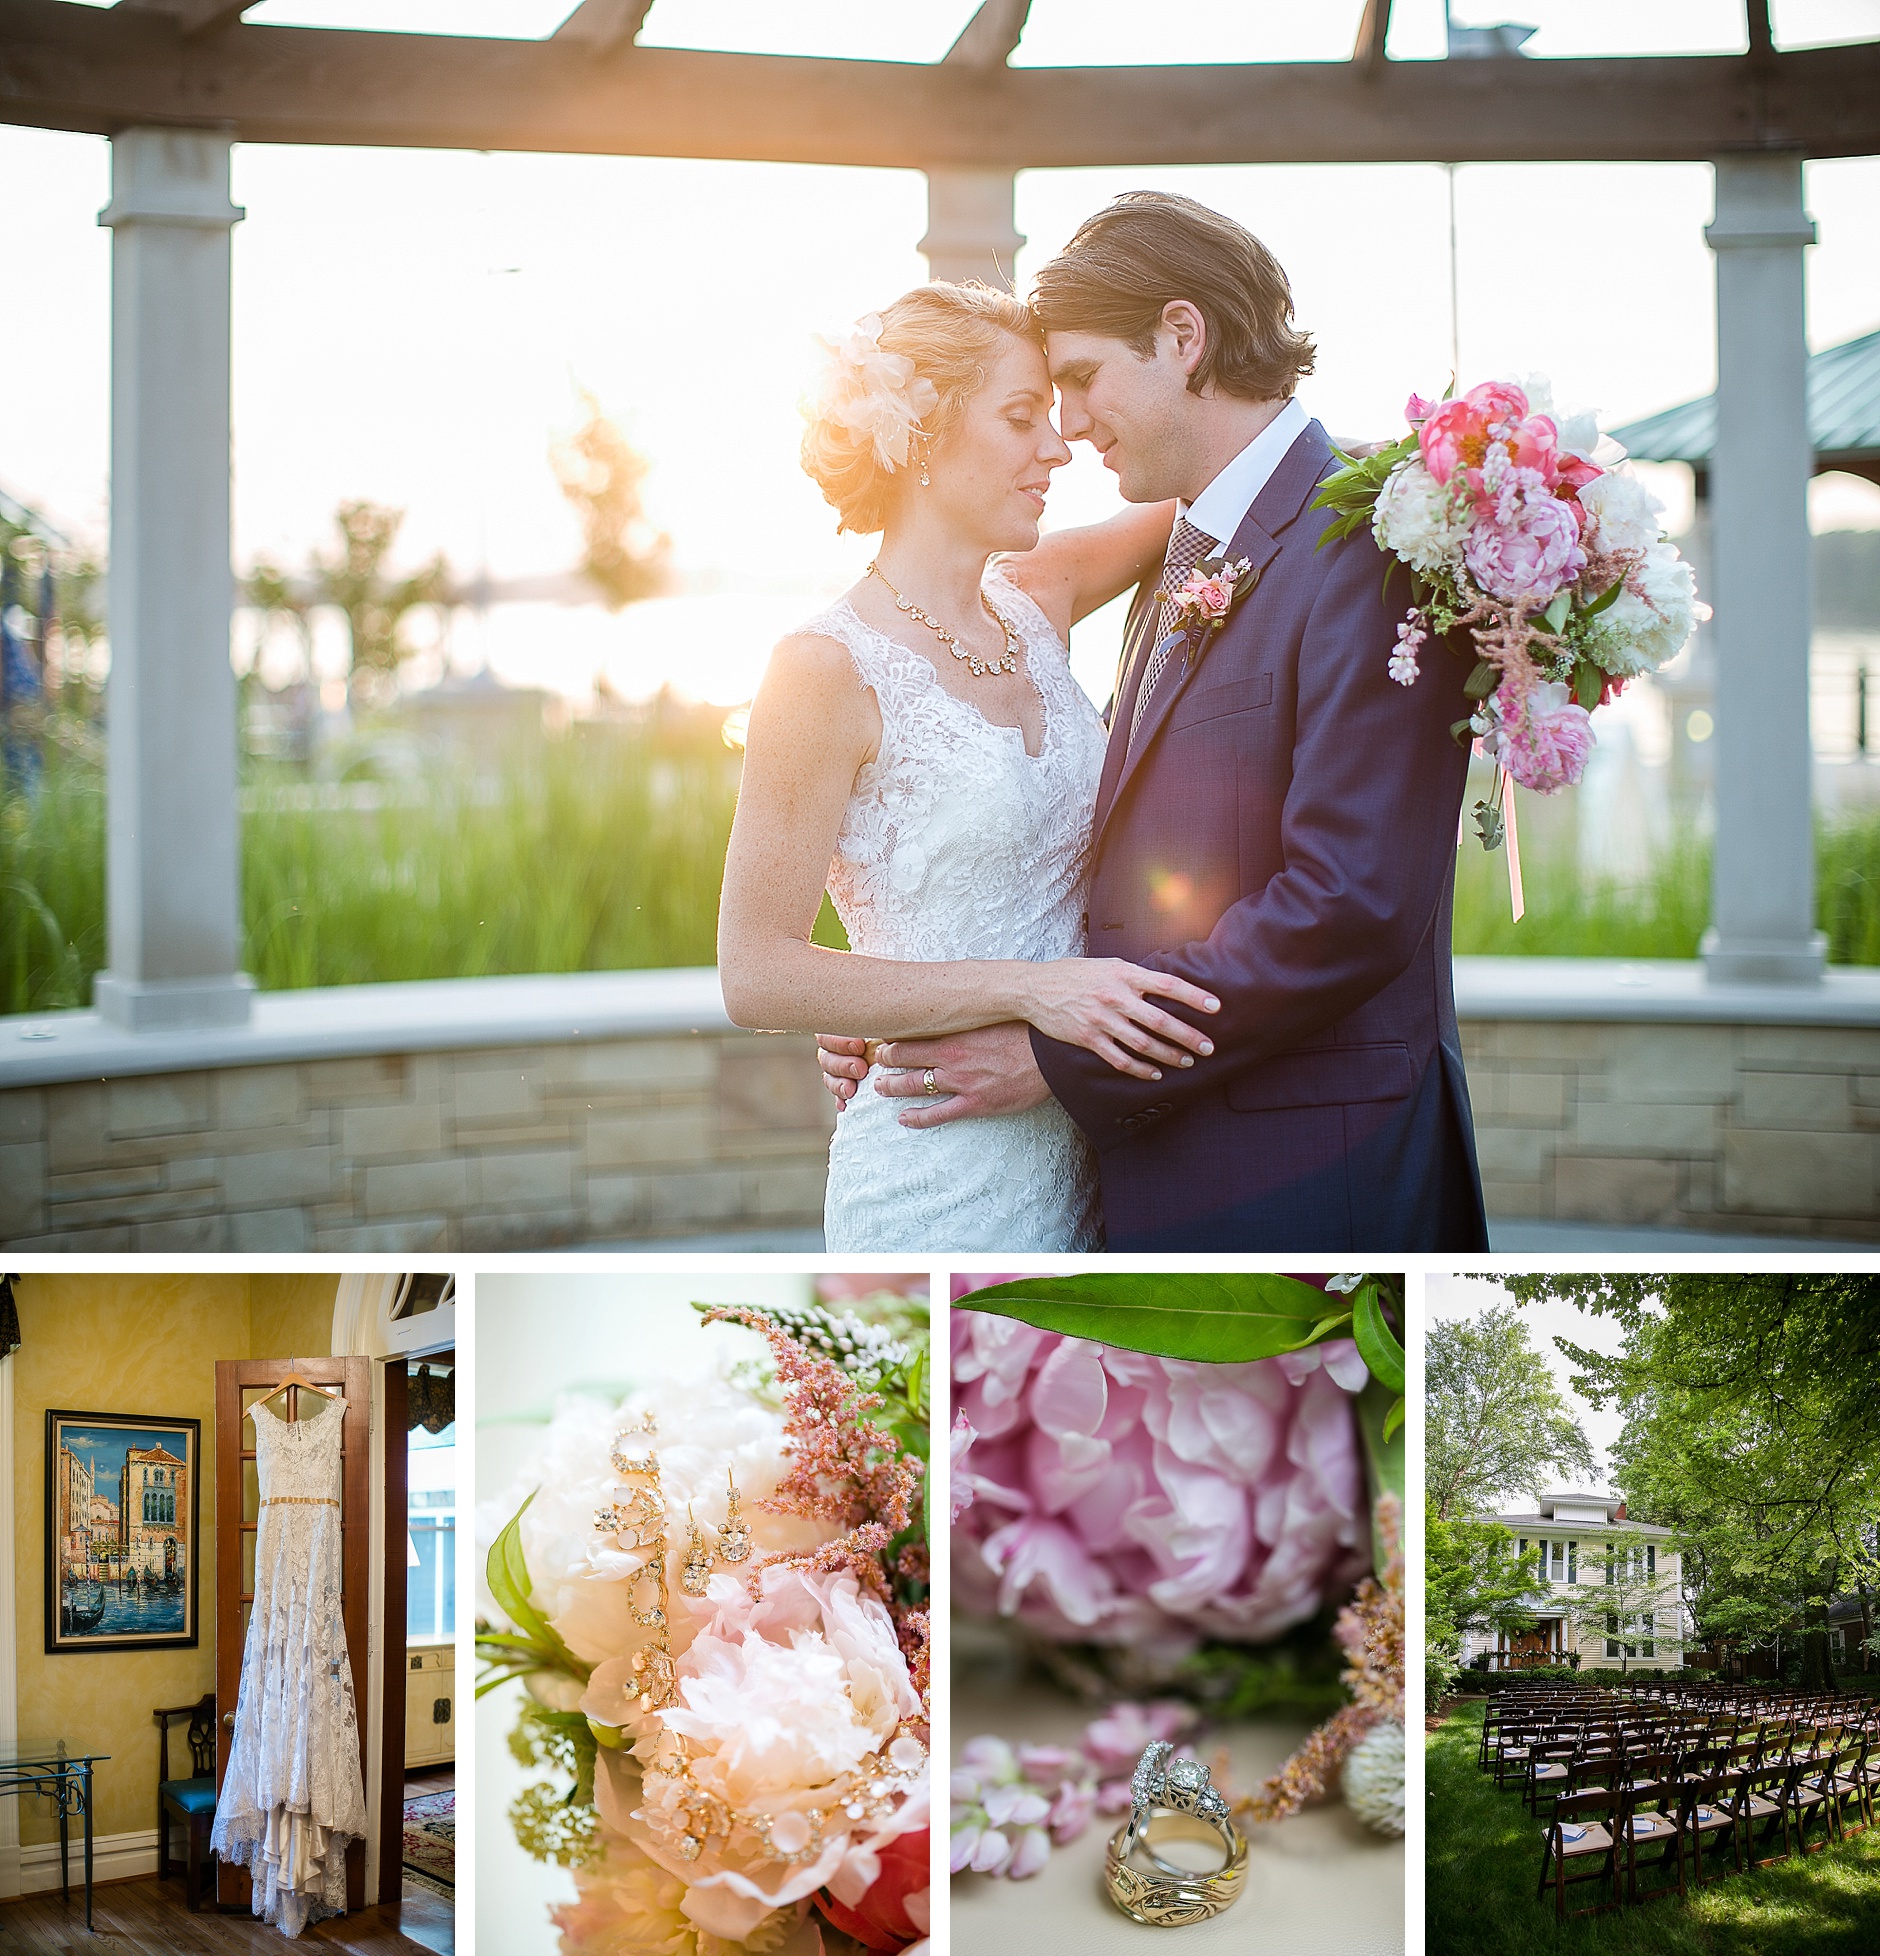 Best-of-Weddings-2015-Rachael-Houser-Photography_0006